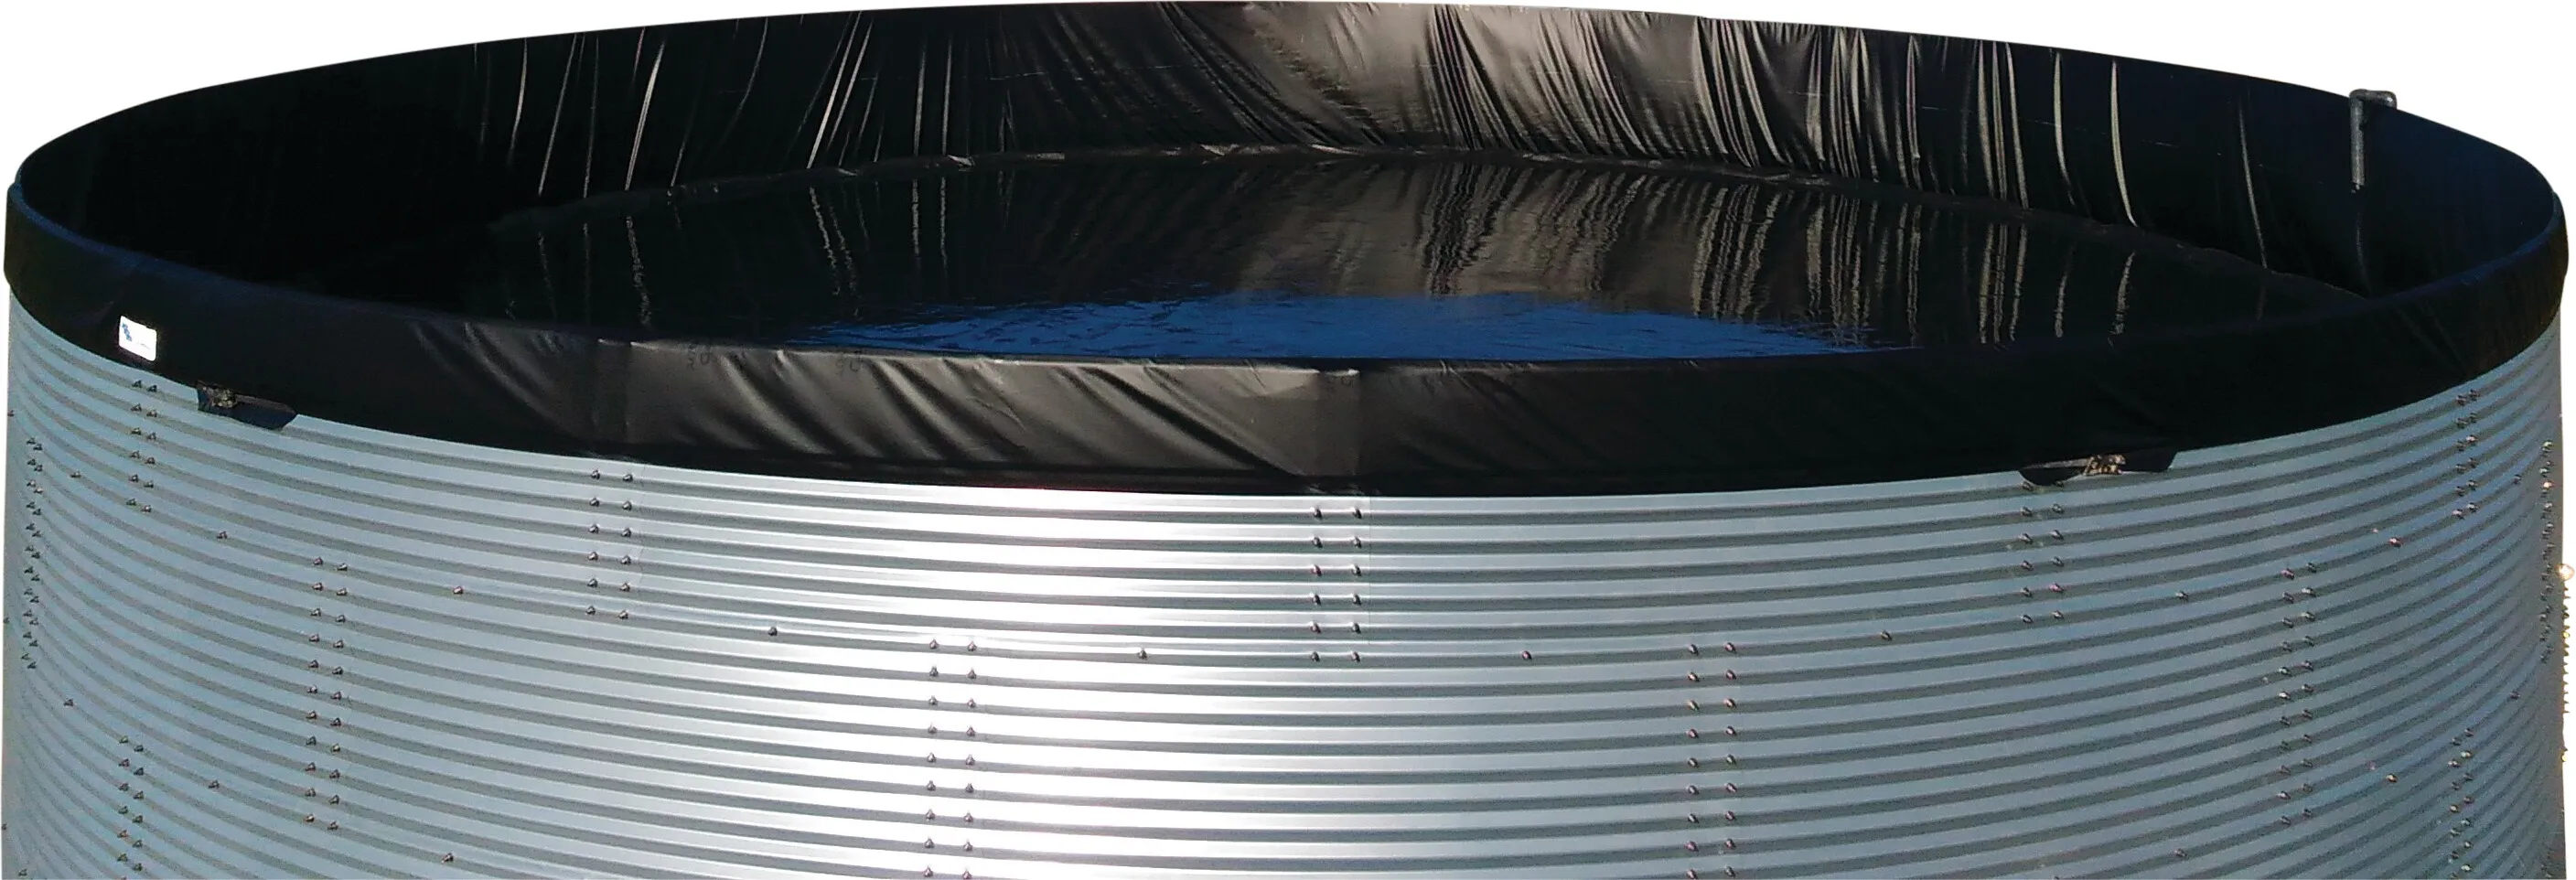 Vandtank stål 2000L type Aquaculture/WSWAVC 1.34 x 1.59m